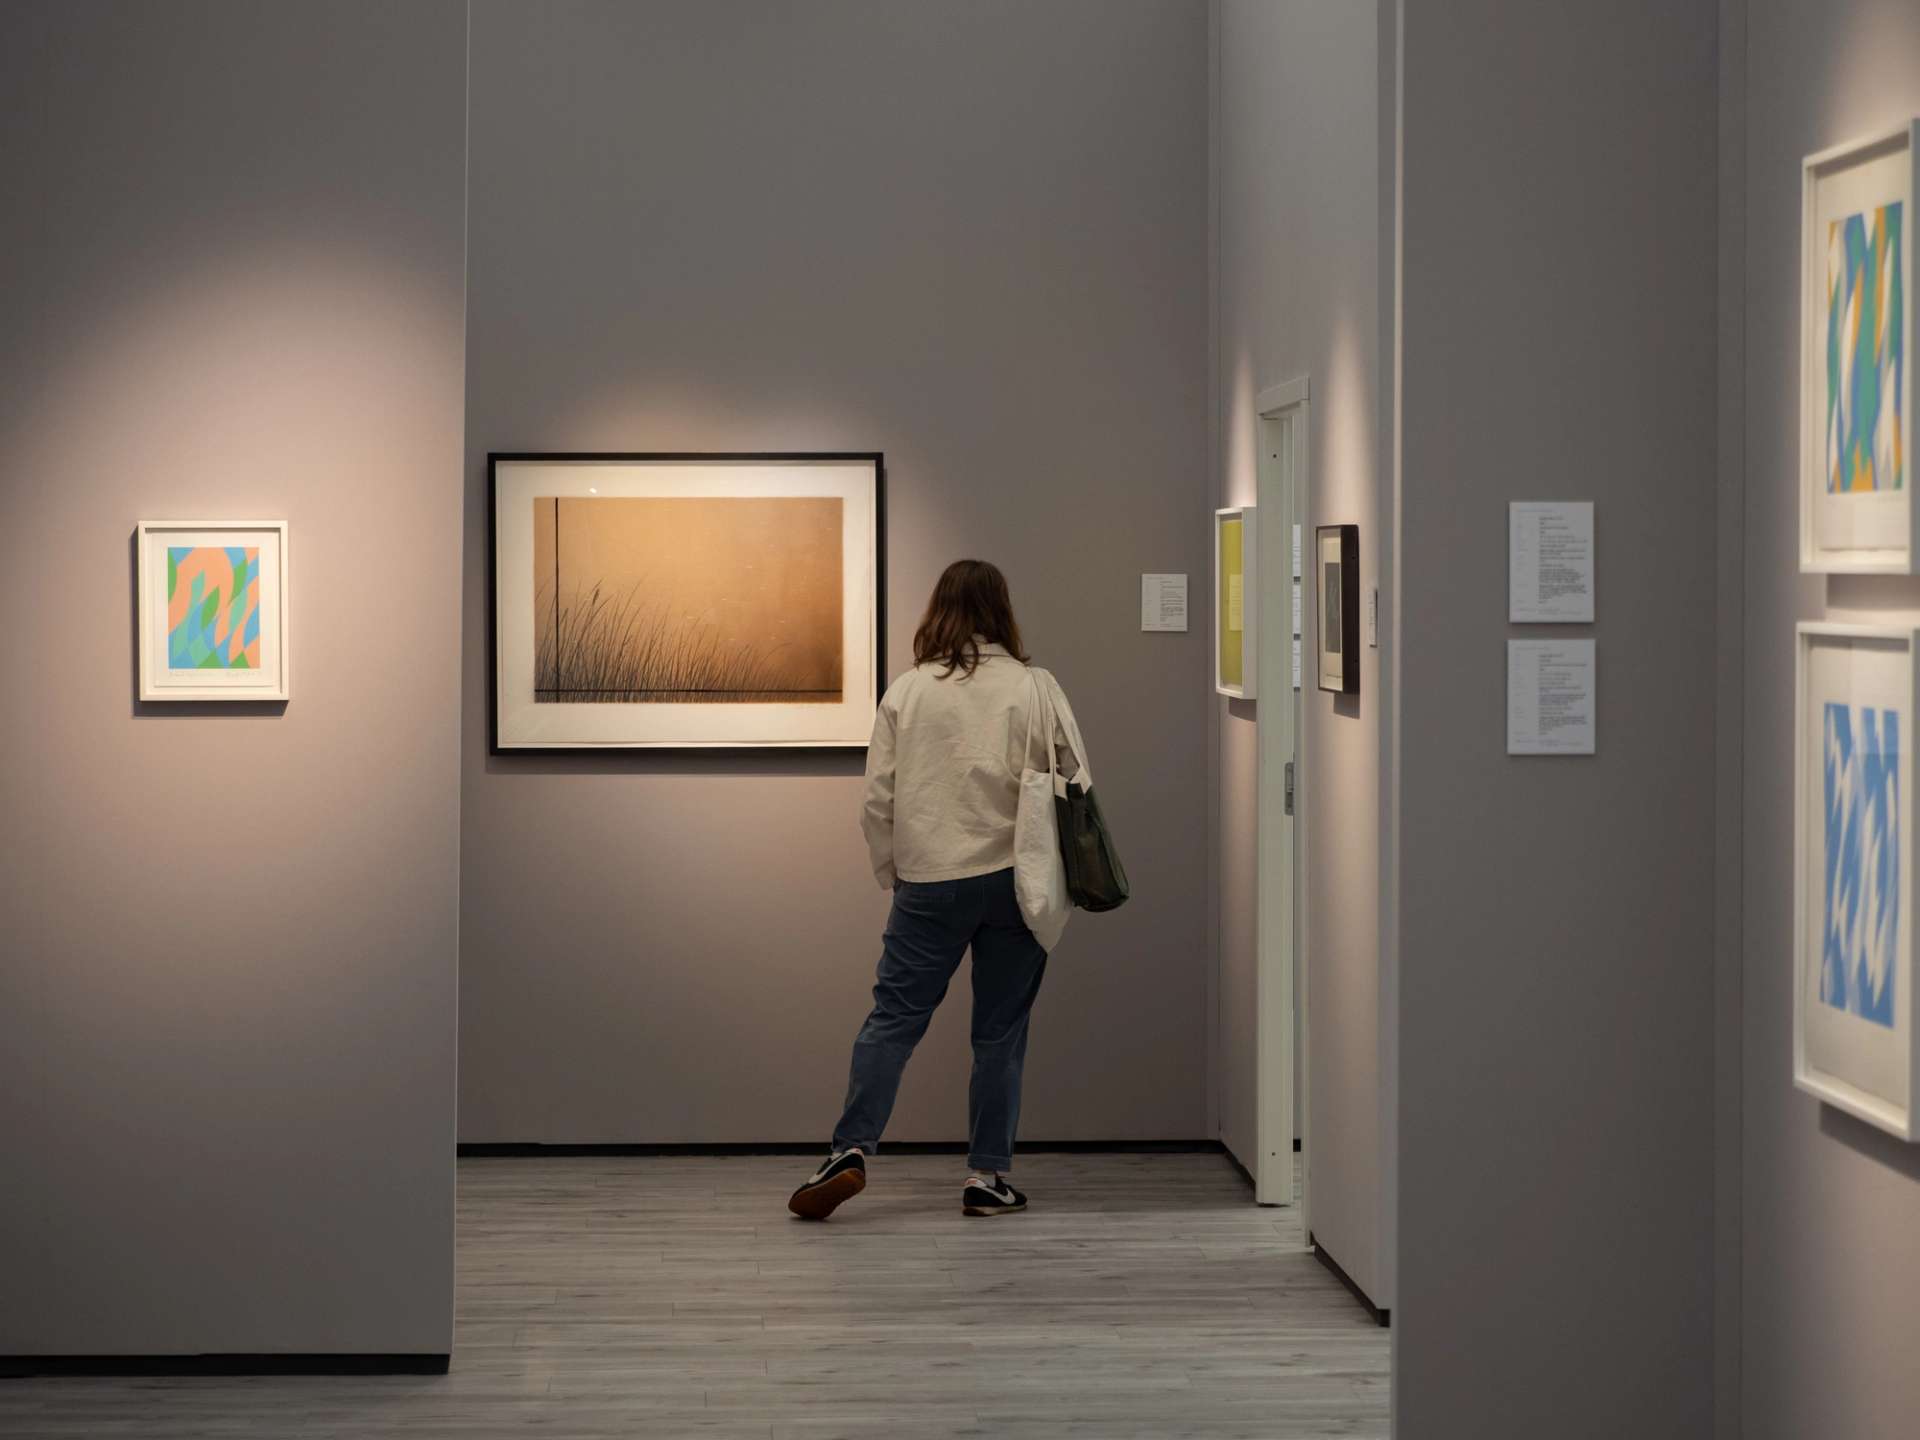 Woman appreciating Bridget Riley's optical art in a vibrant art gallery exhibition space.